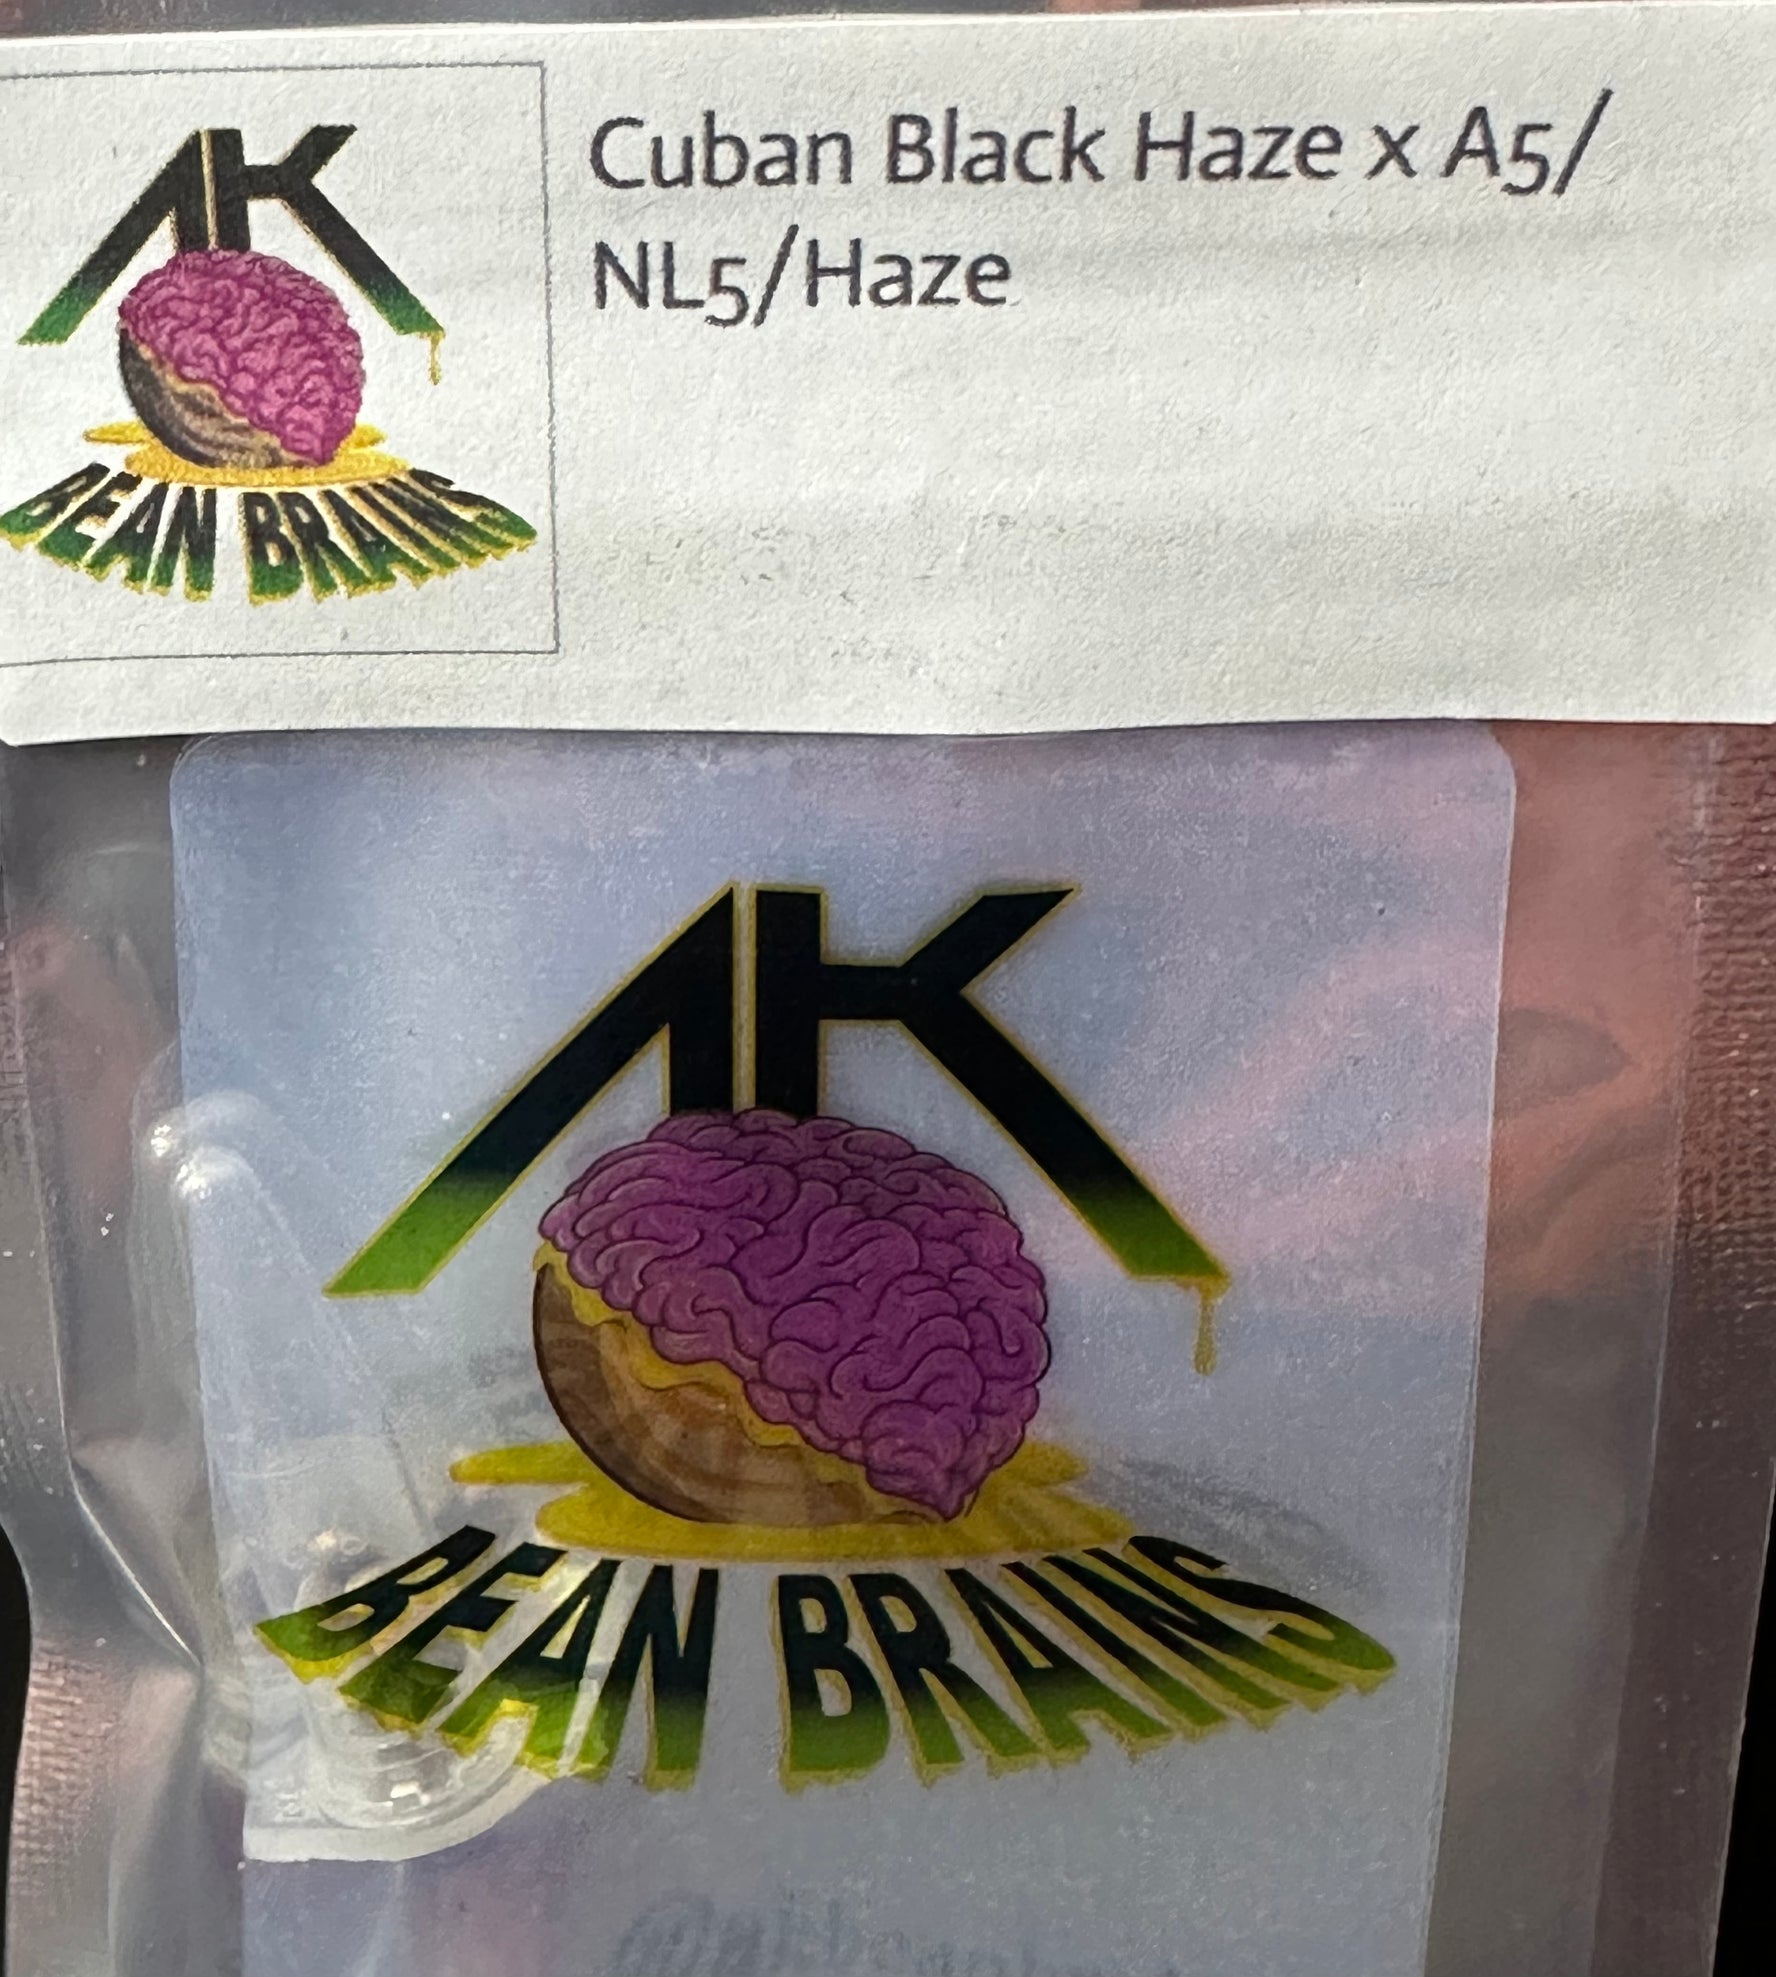 AK Bean Brains - Cuban Black Haze x A5/NL5/Haze